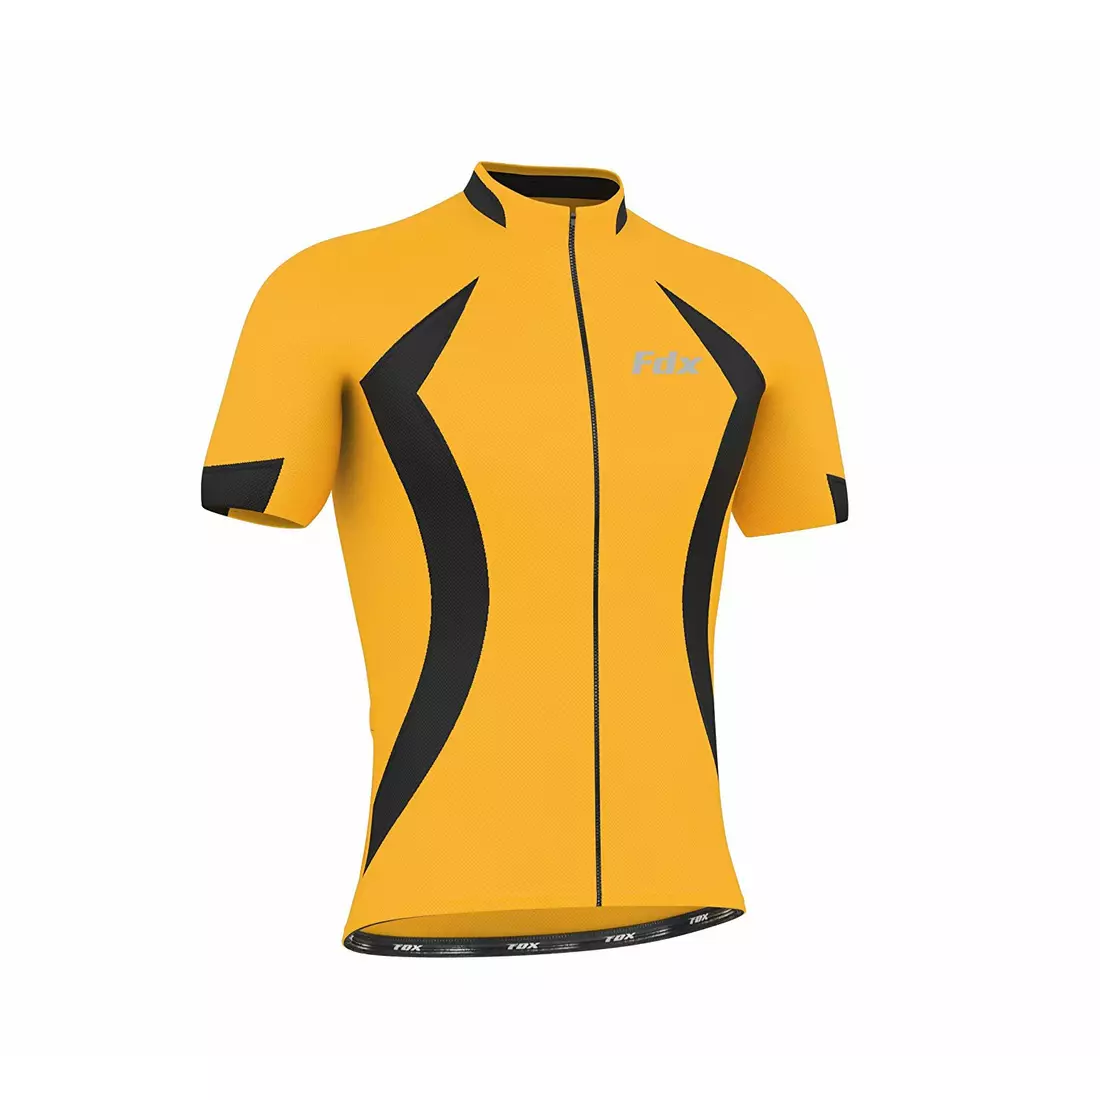 FDX 1090 cycling jersey, yellow and black